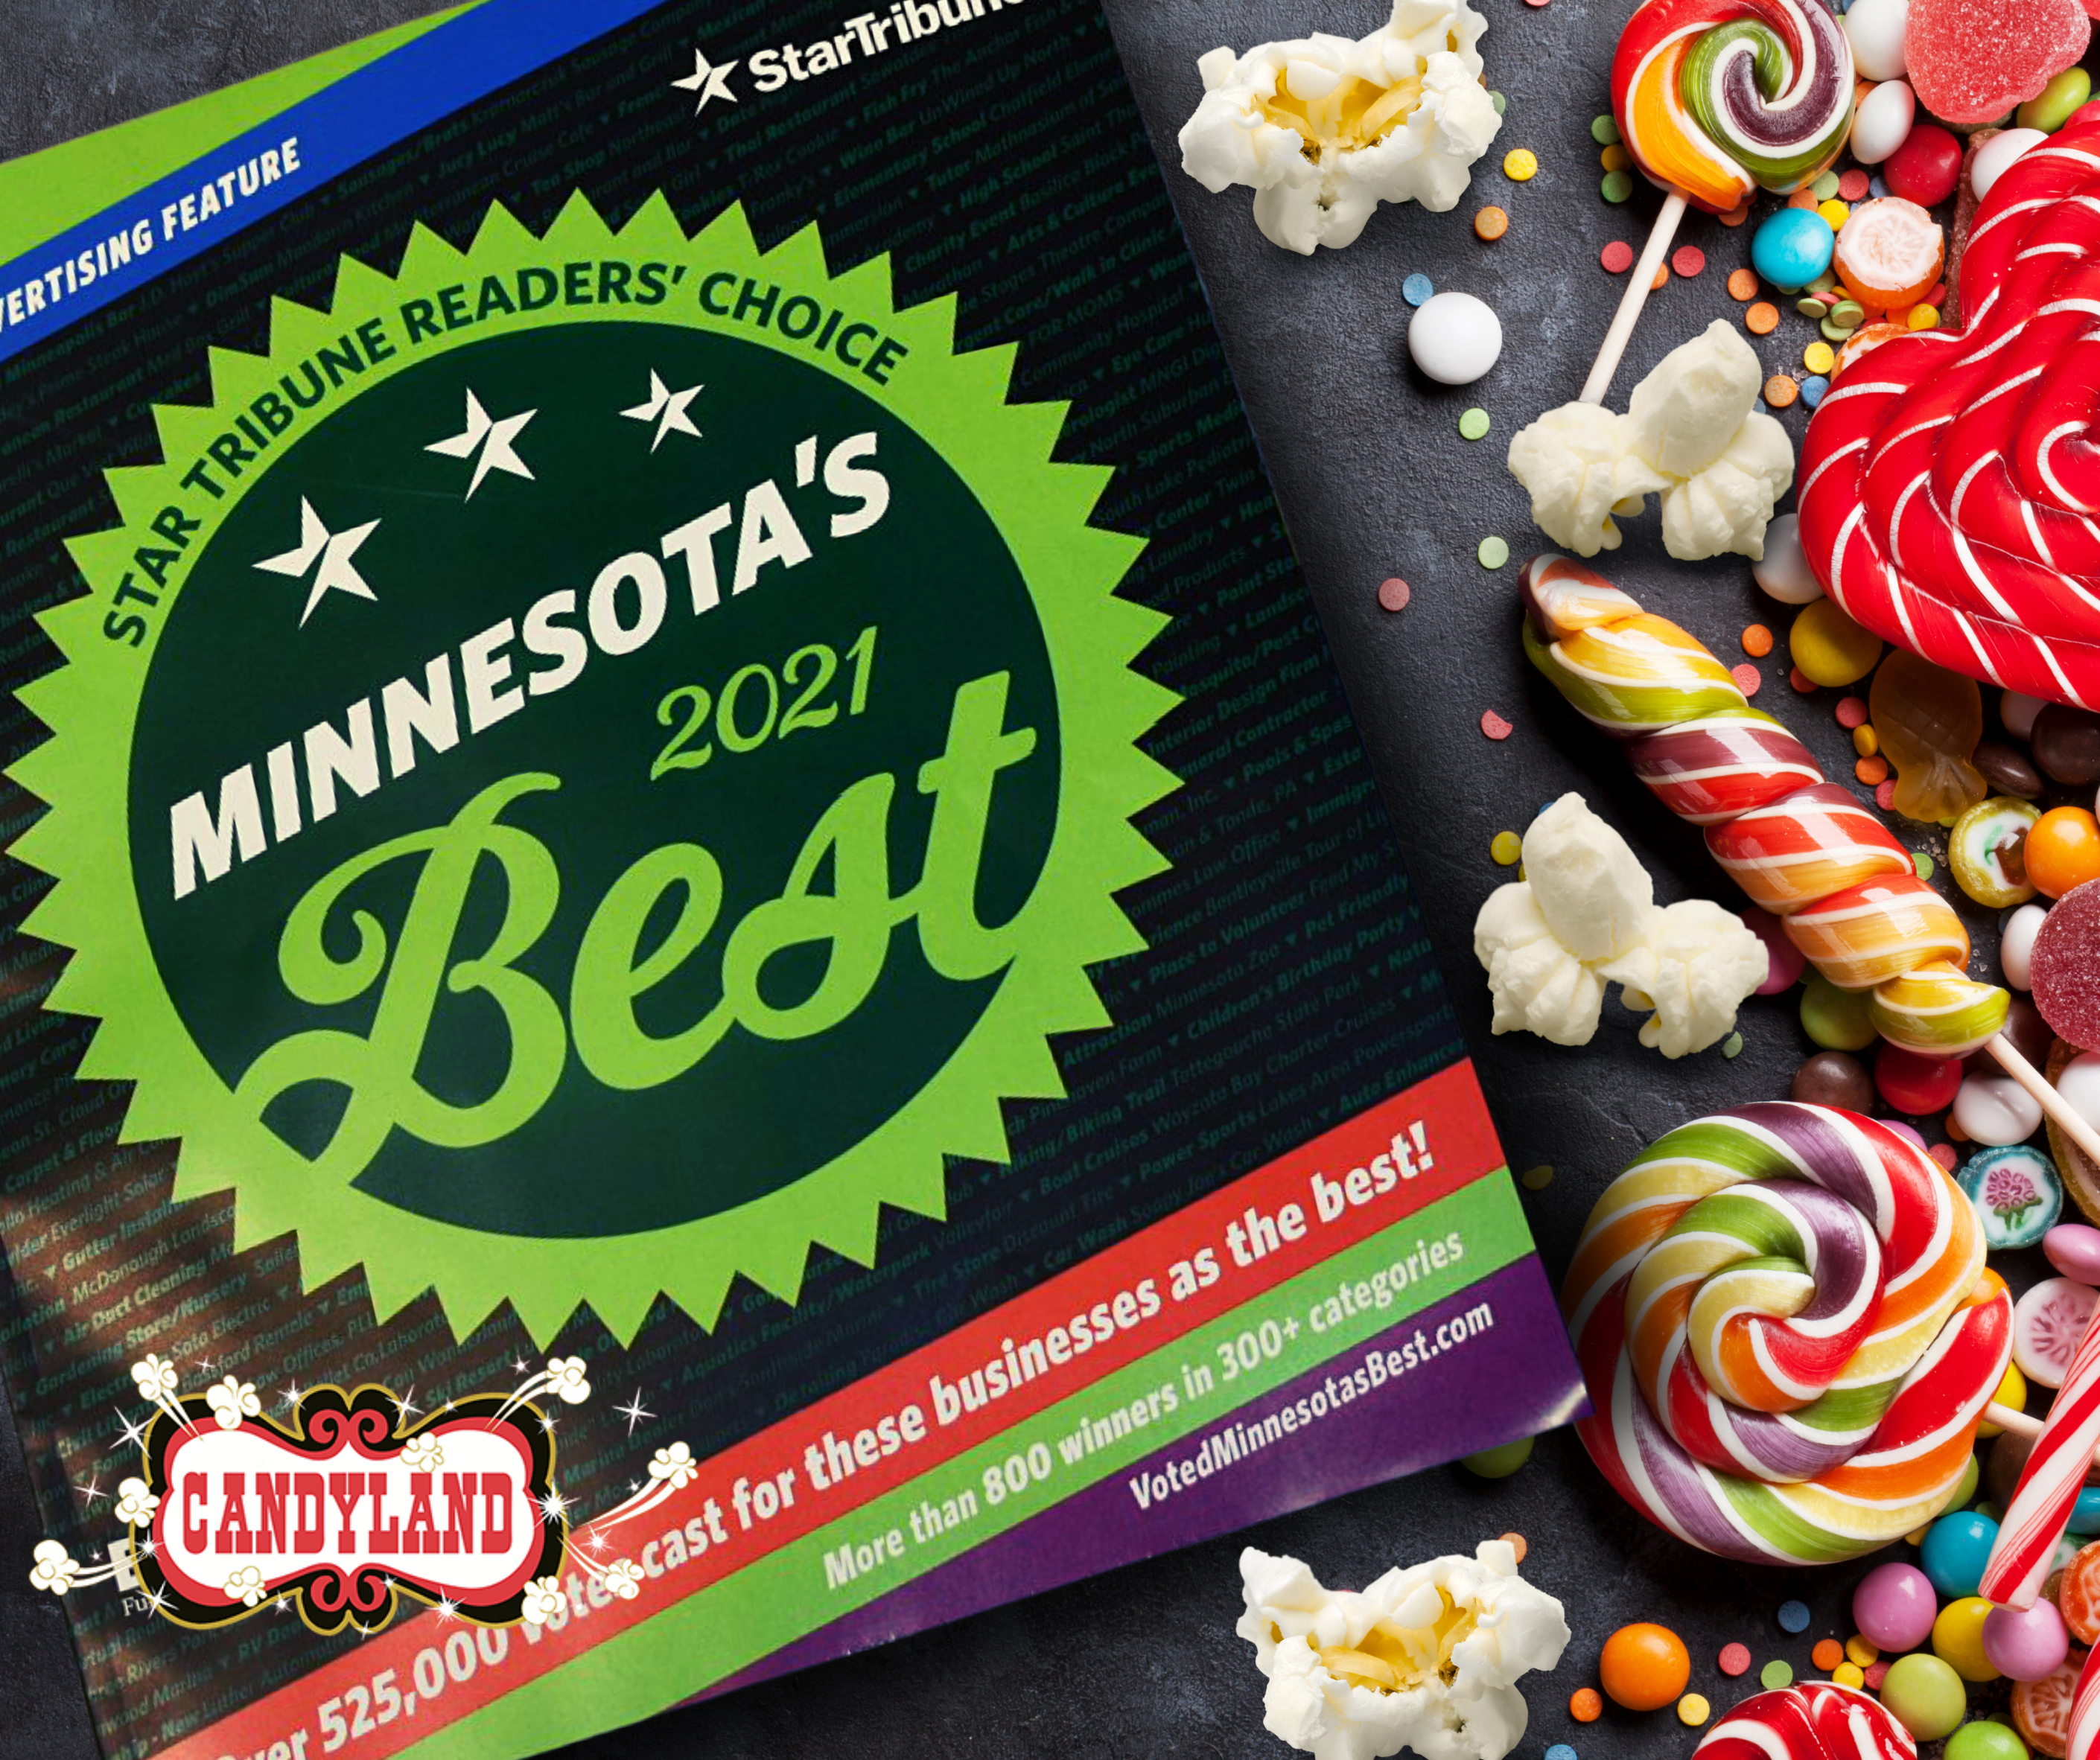 Minnesota’s Best 2021!!